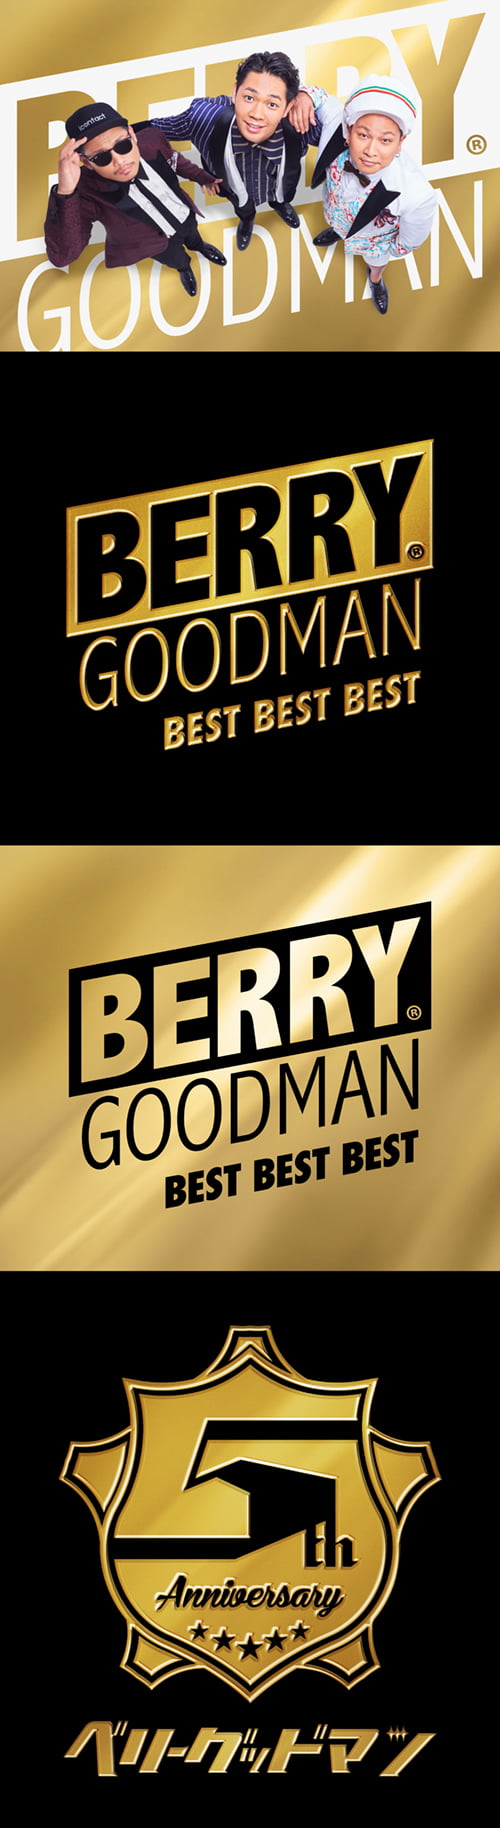 BERRY GOODMAN / BEST BEST BEST